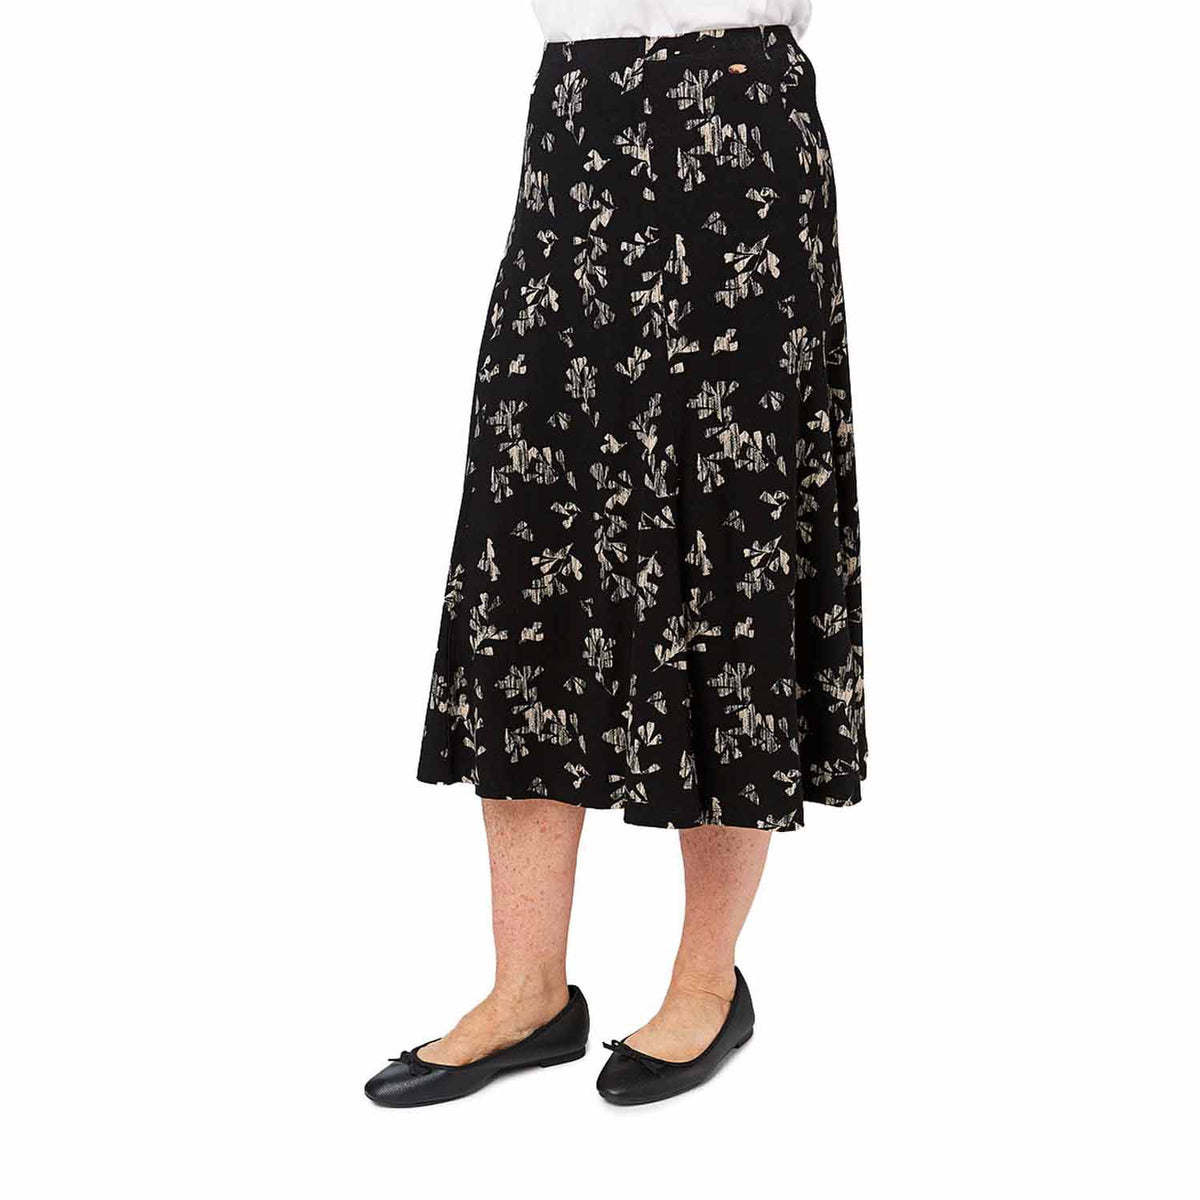 Leaf Print Short Skirt - Black